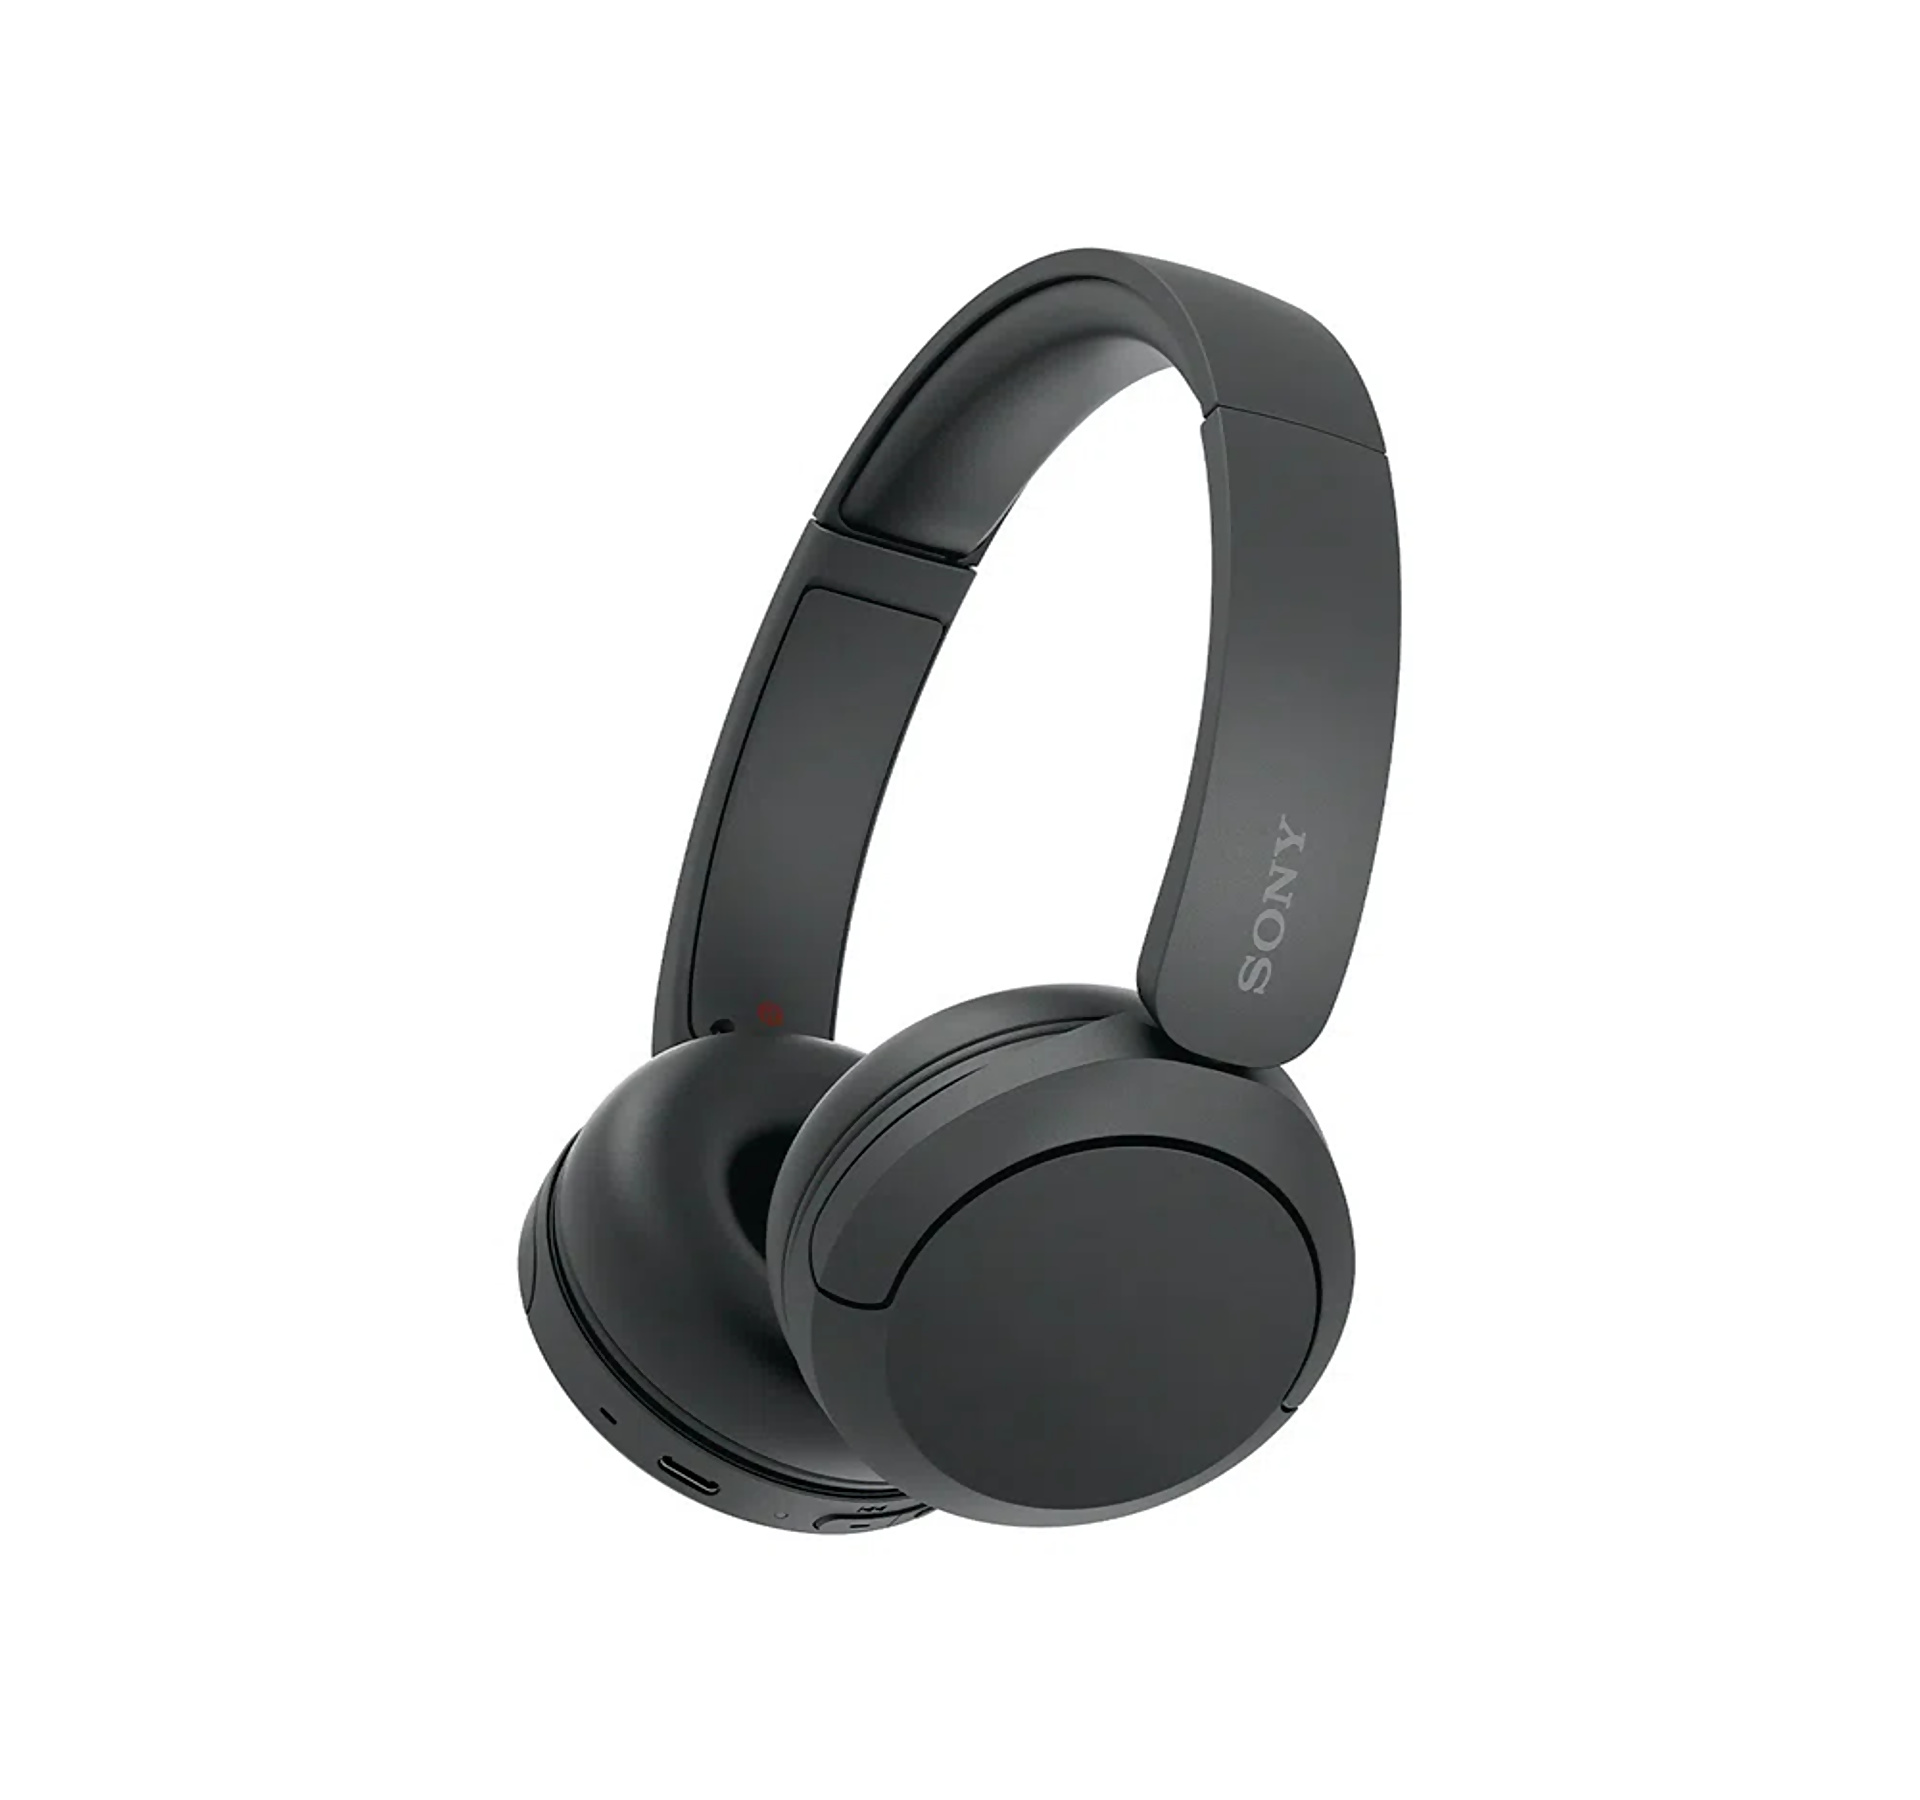 Audífonos inalámbricos Sony WH-CH510 Bluetooth - Negro SONY